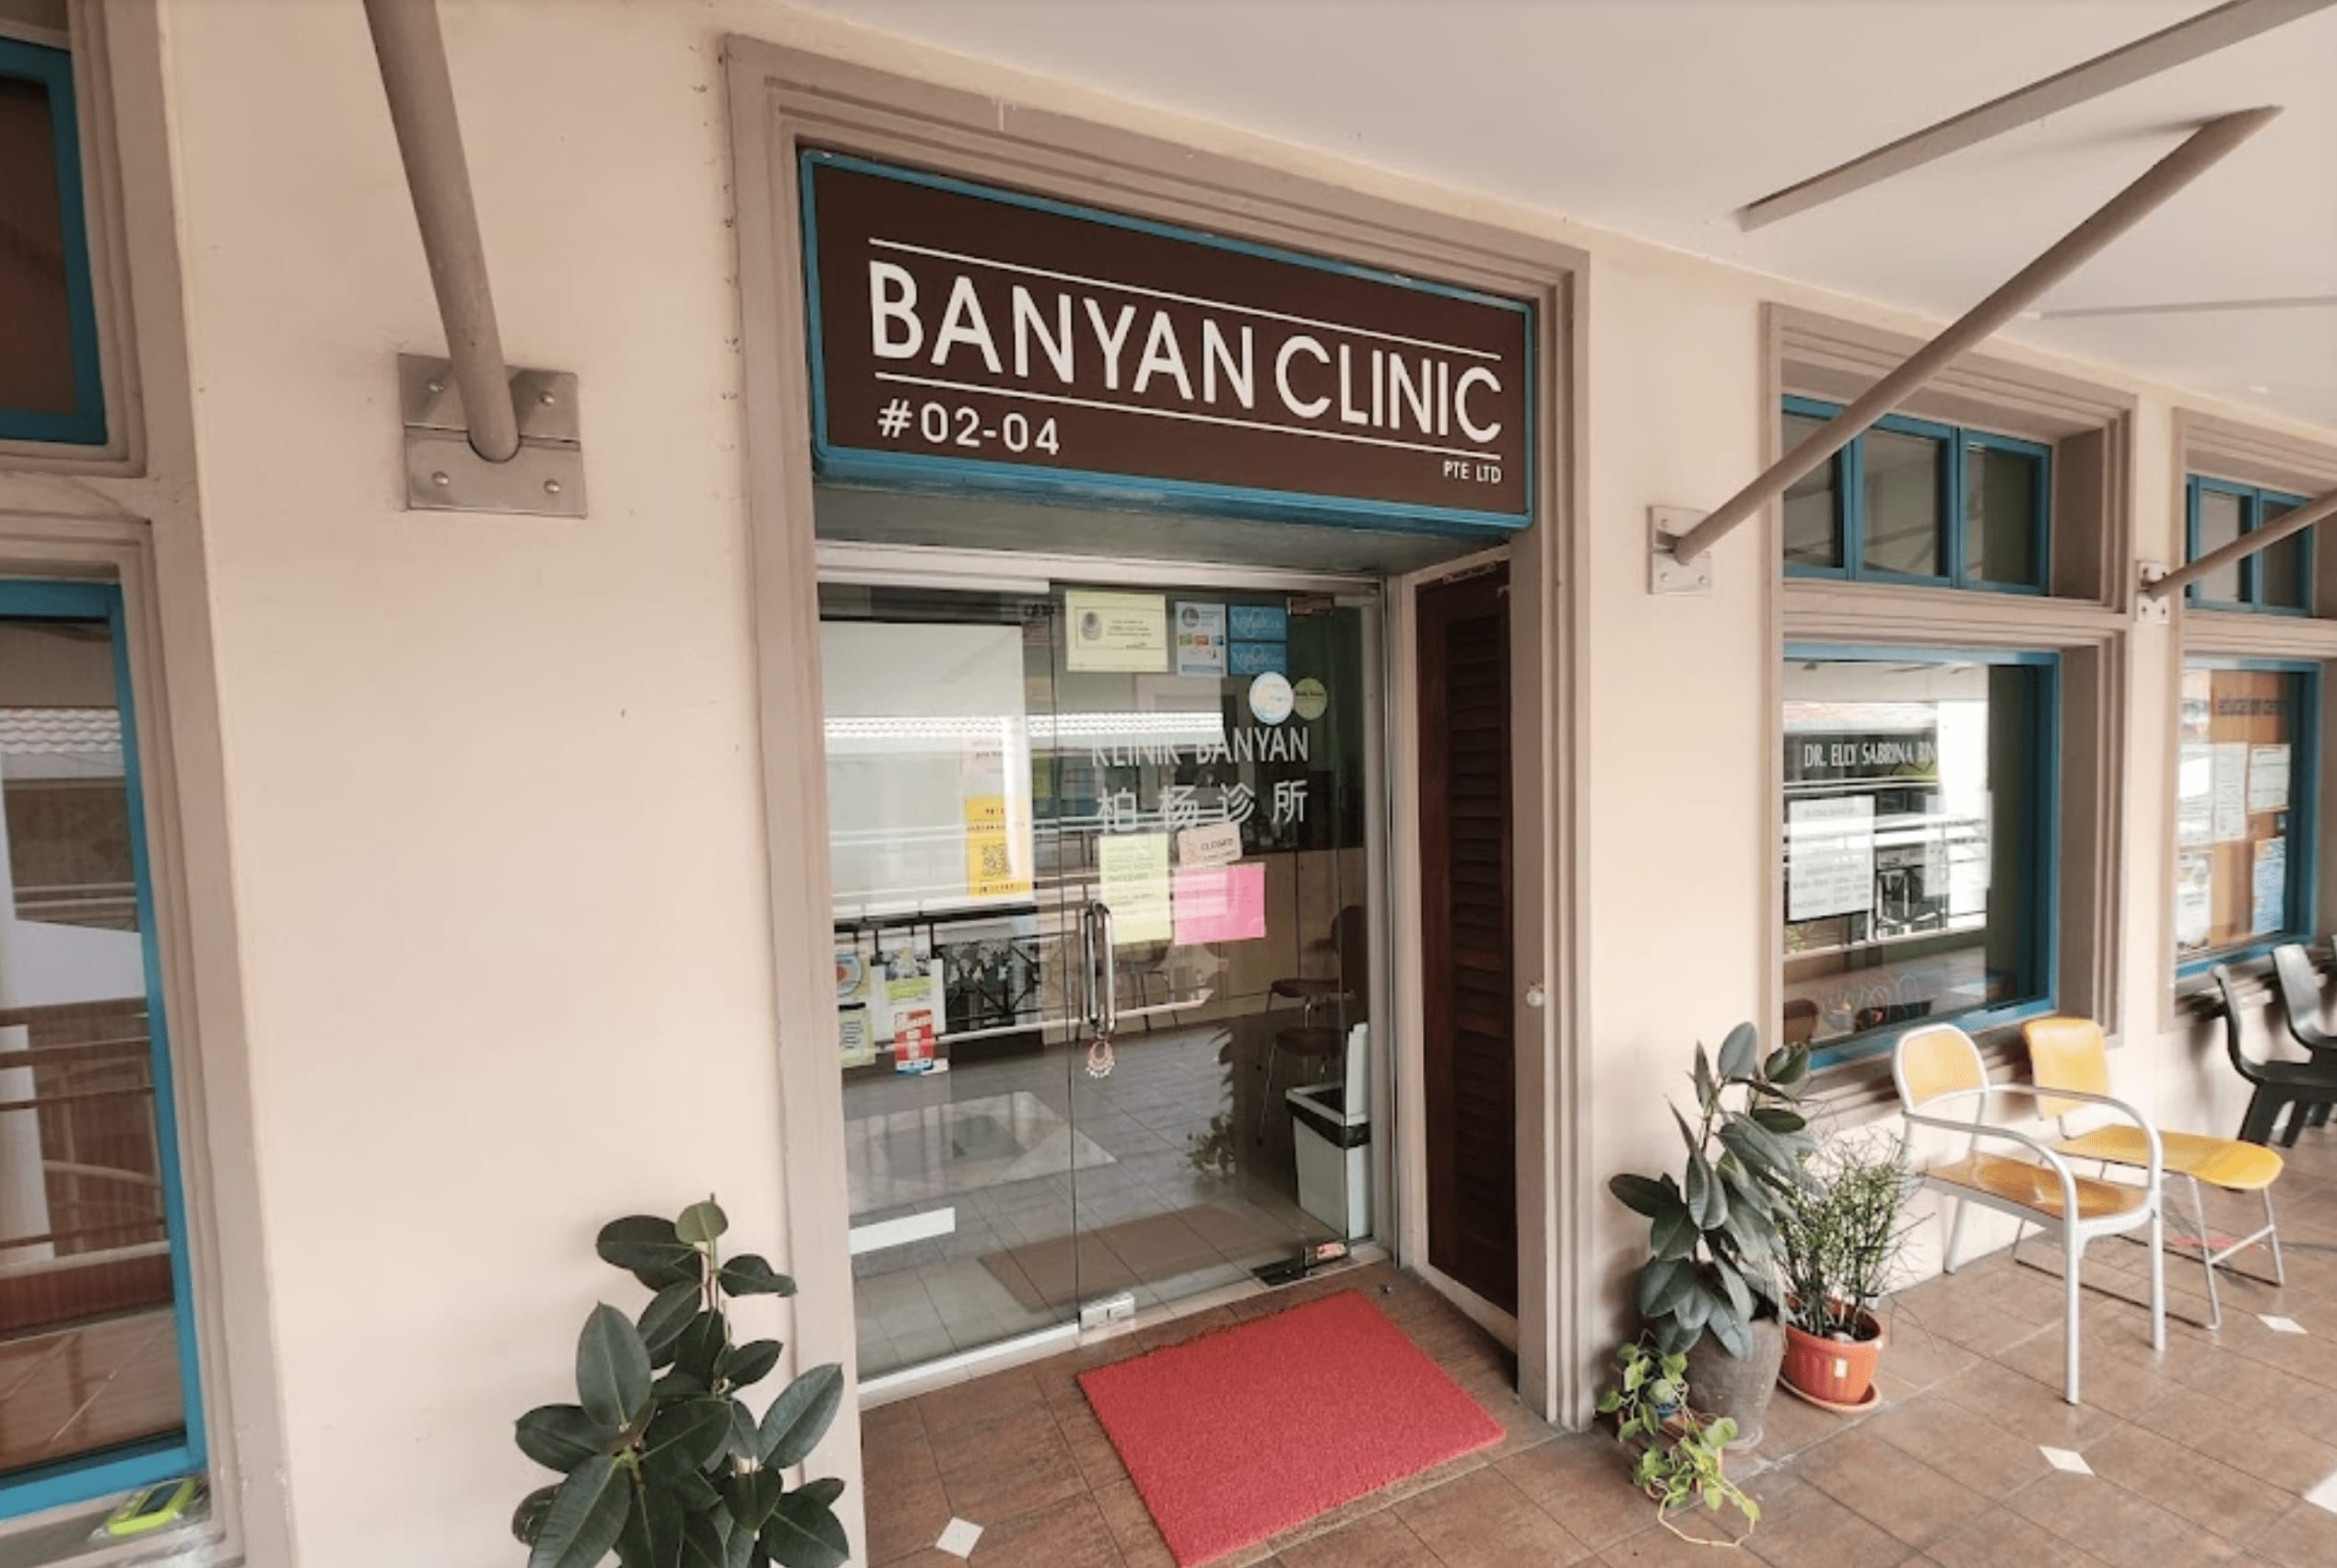 Banyan Clinic Pte Ltd